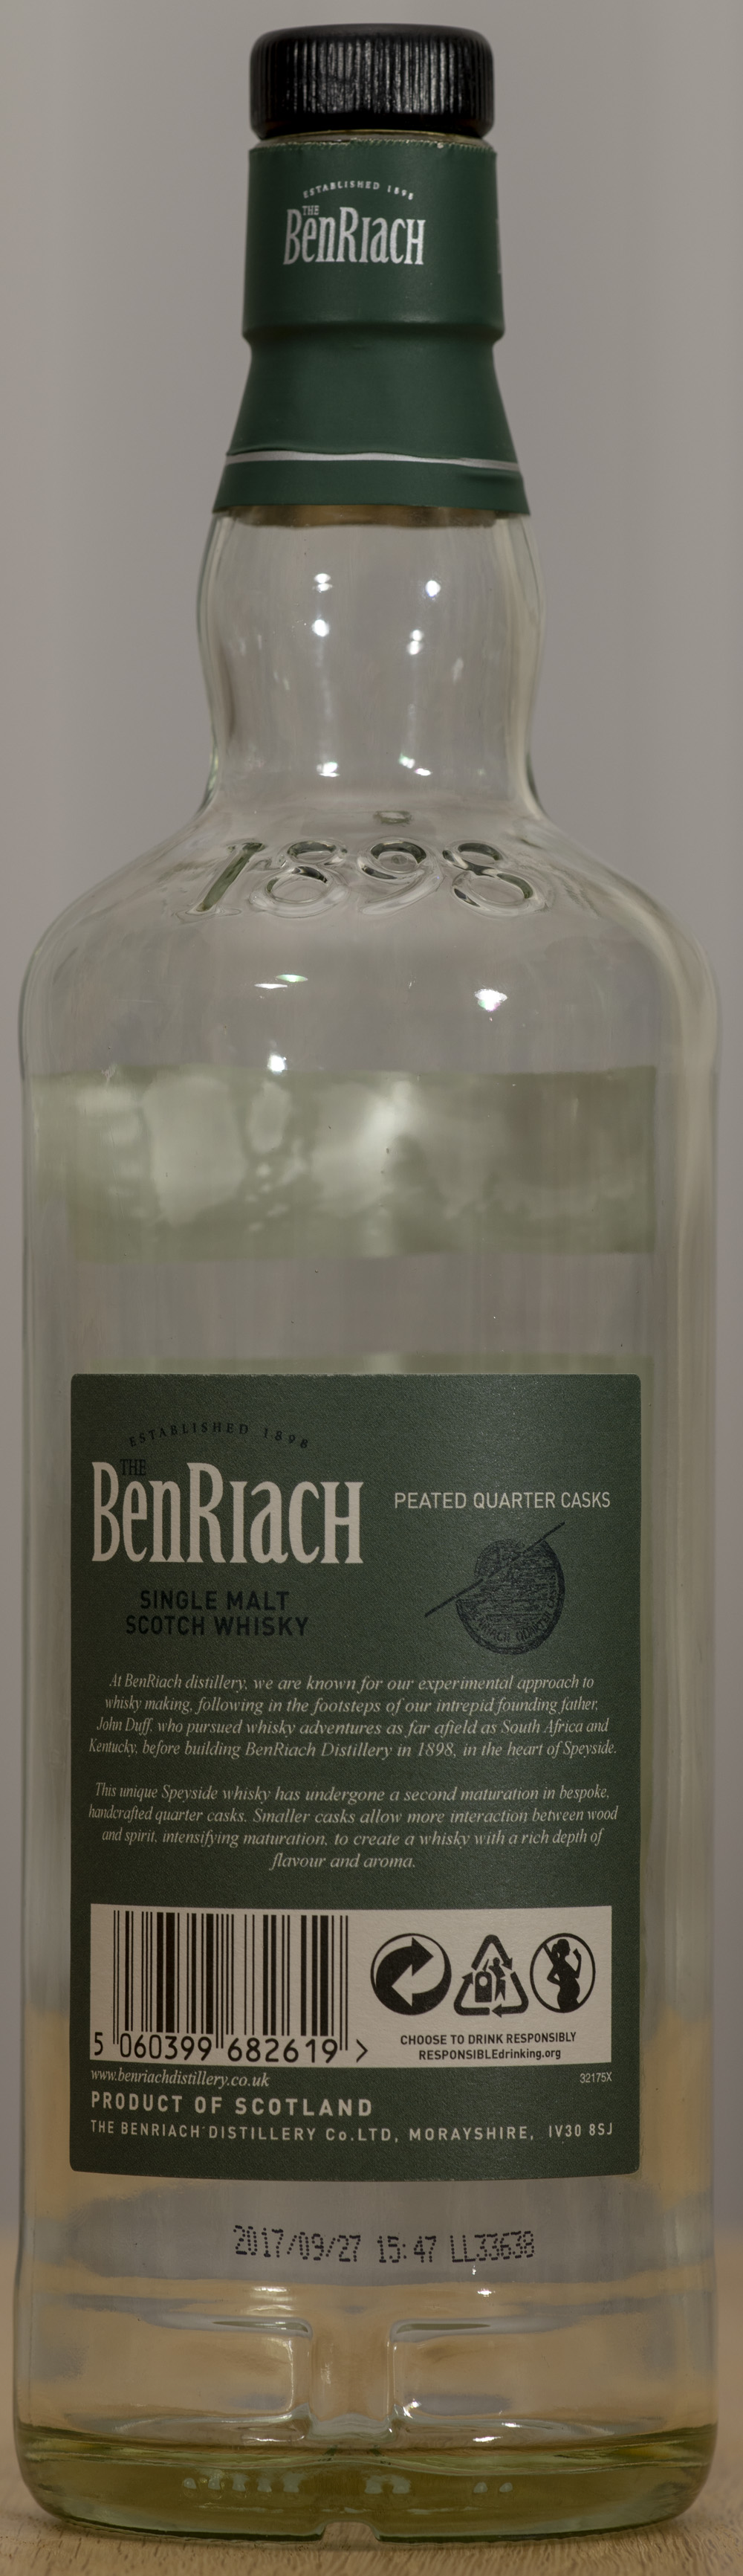 Billede: PHC_1579 - Benriach Peated Quarter Cask - bottle back.jpg